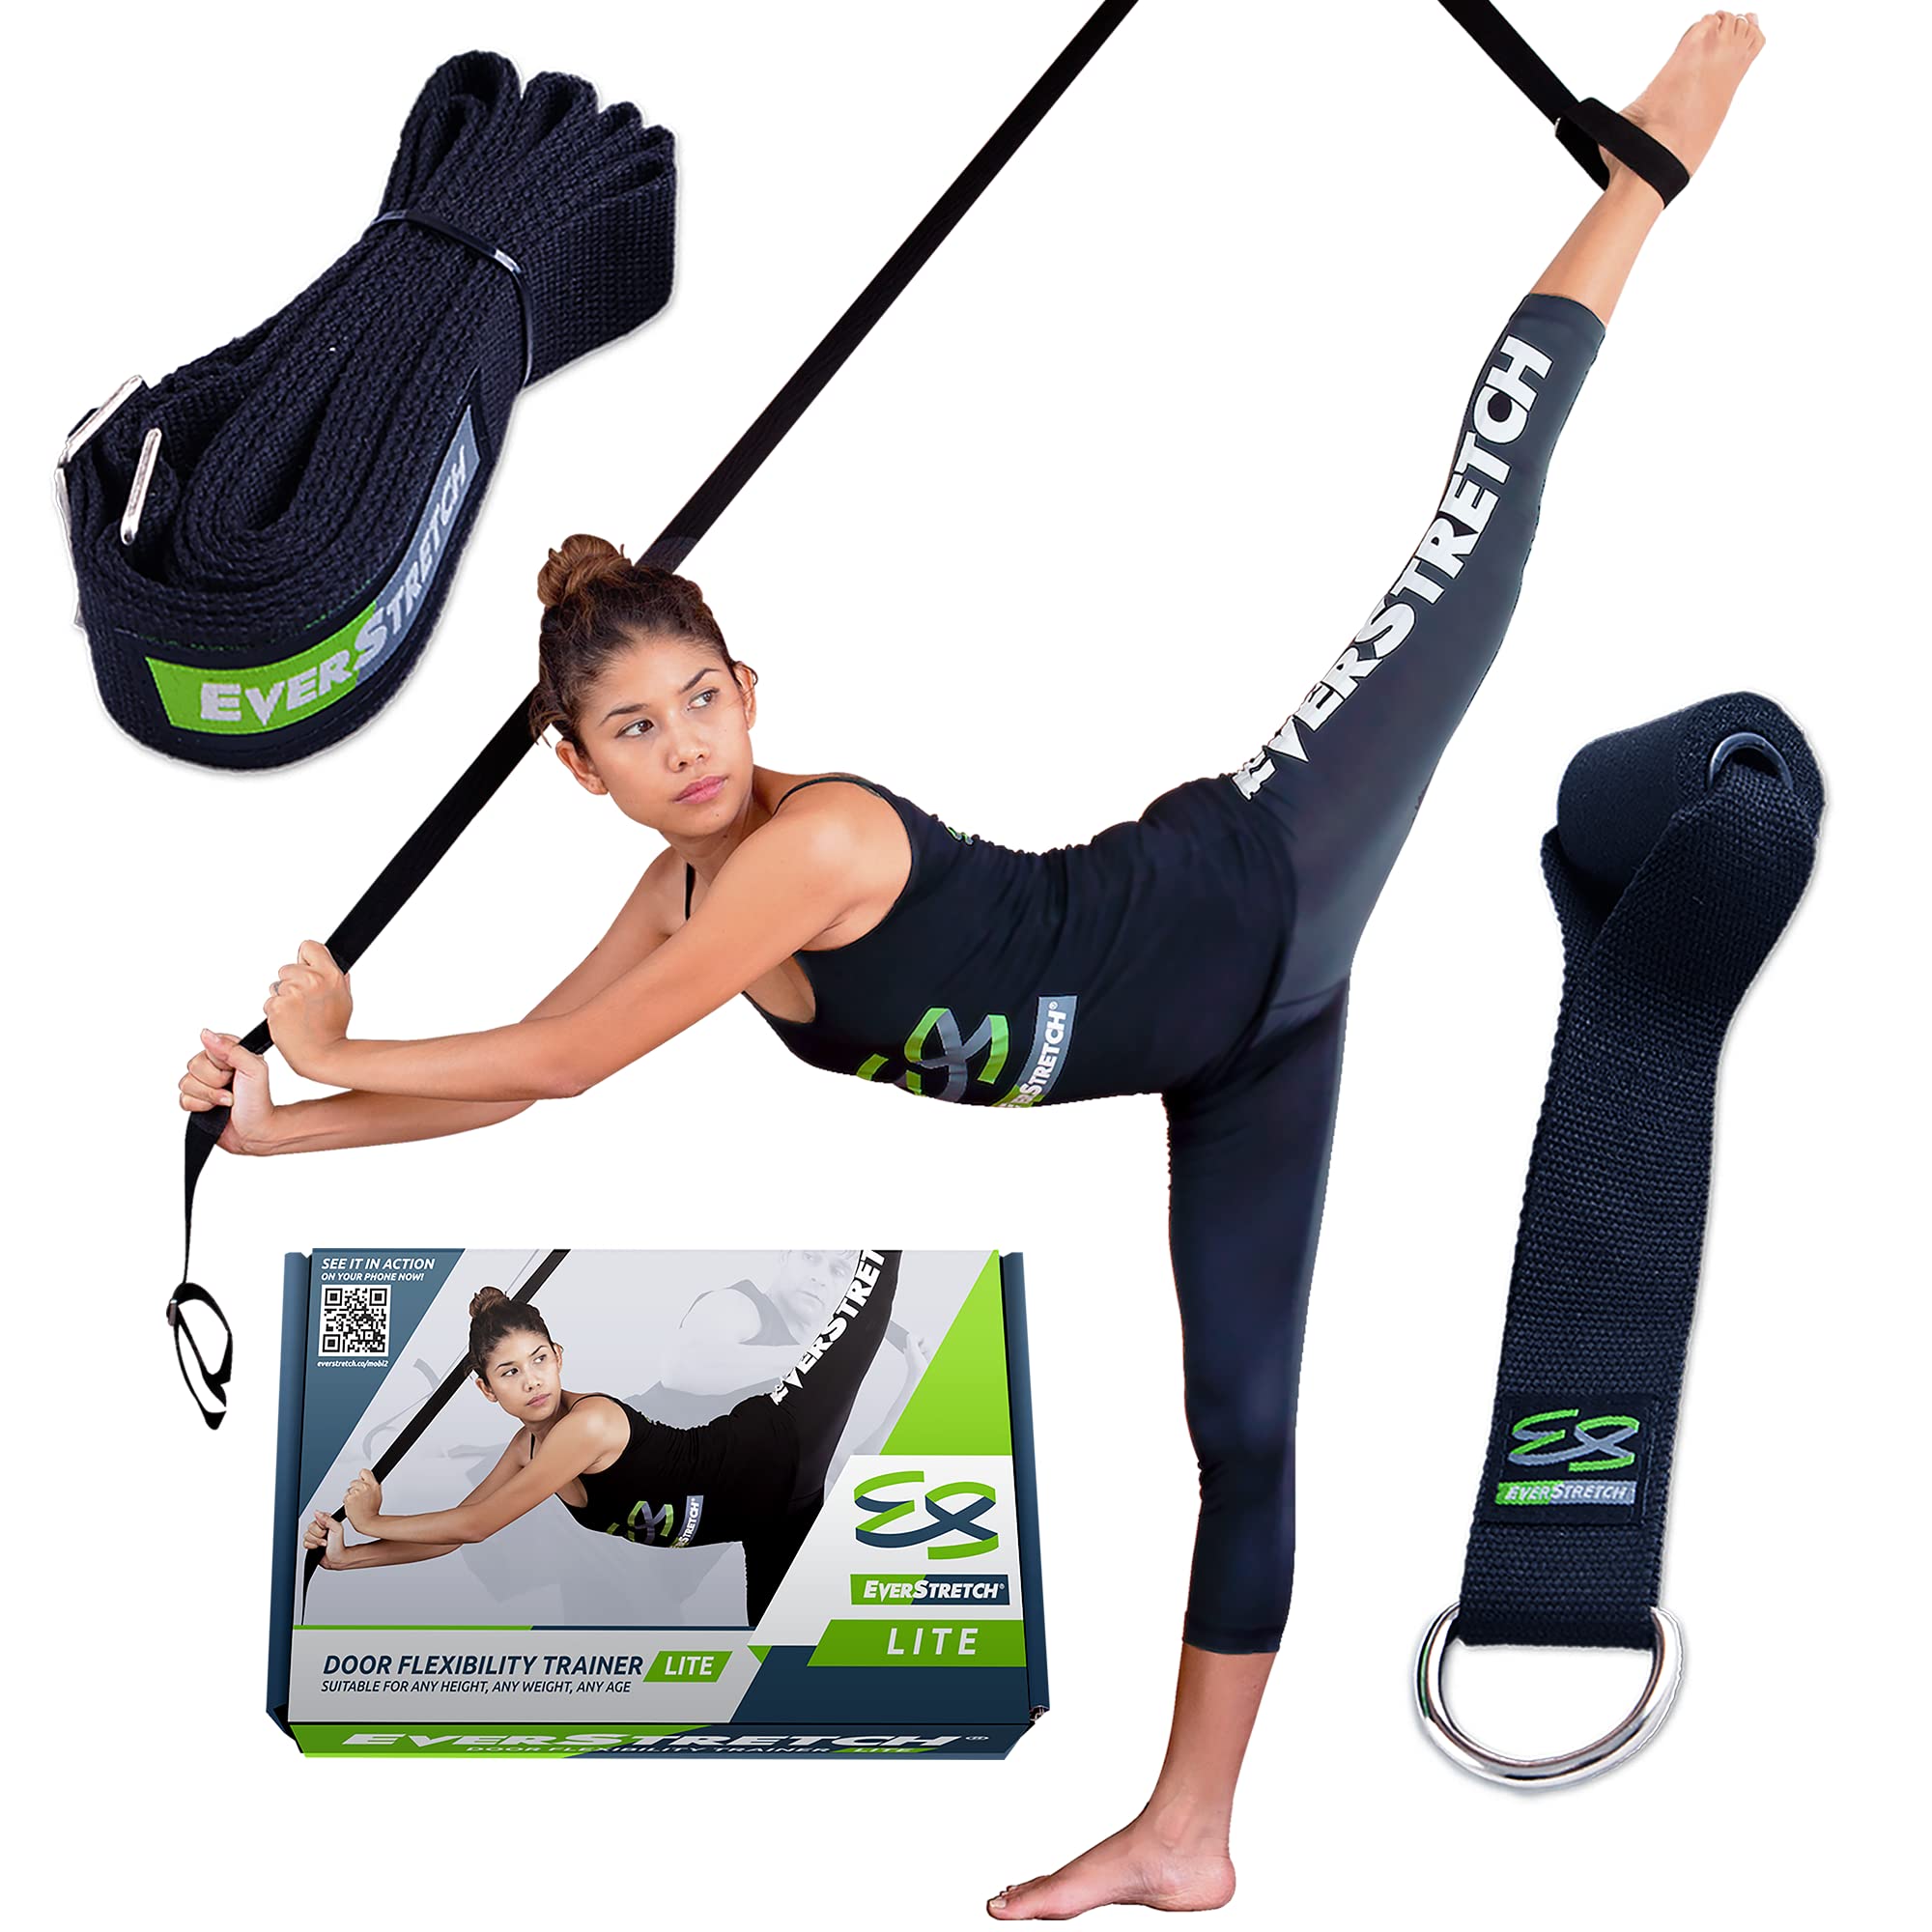 EverStretch Leg Stretcher LITE: Get Flexible with Over The Door